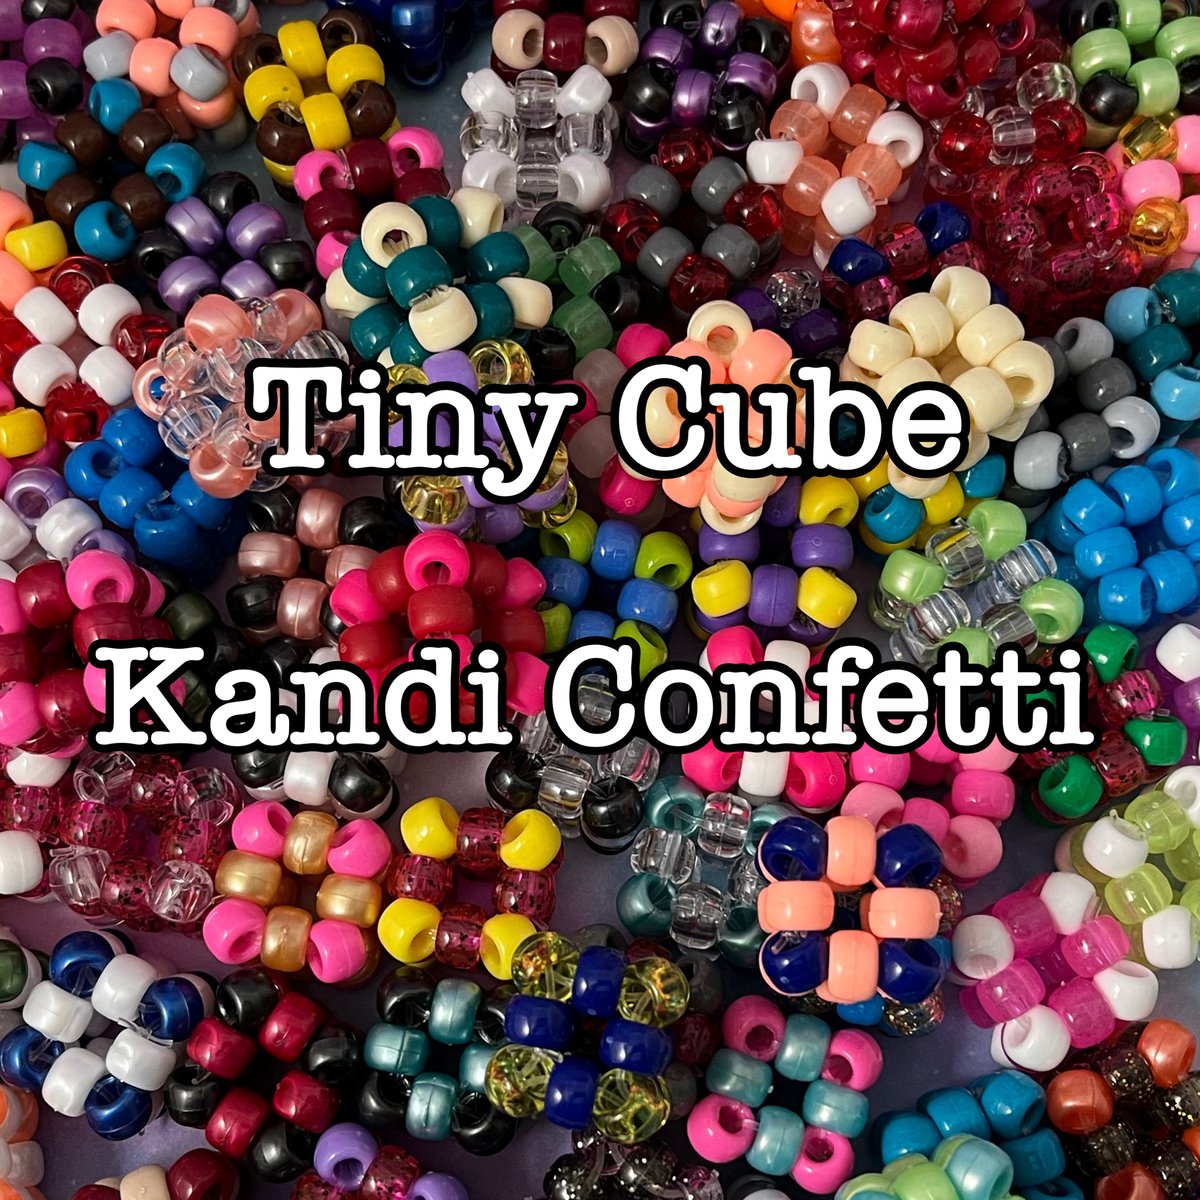 Tiny Fidget Cube Kandi Confetti